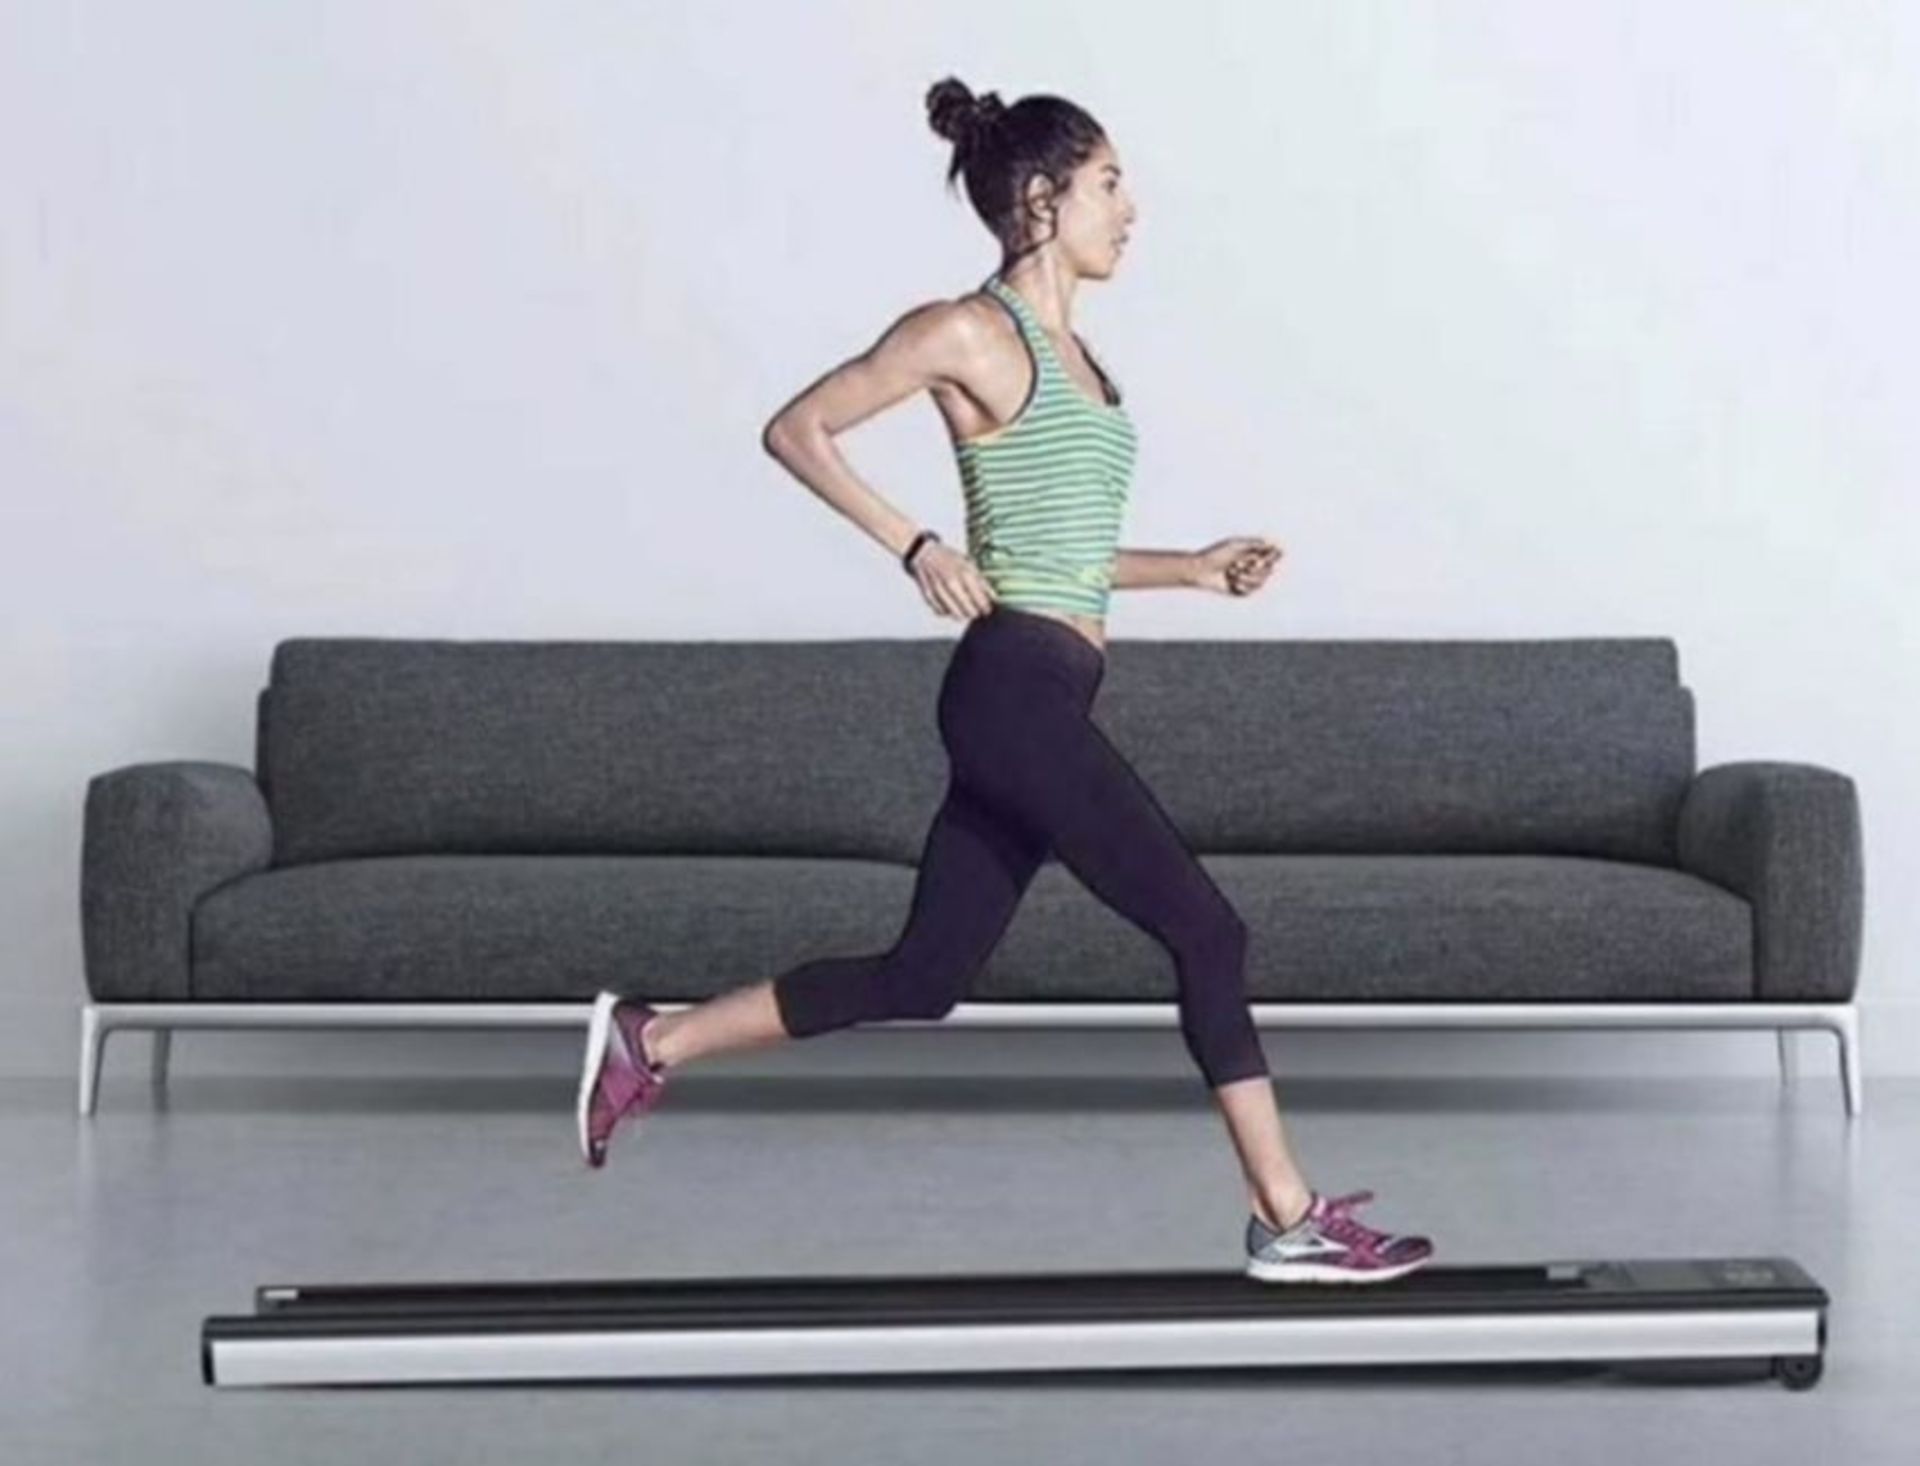 JOB LOT of 10 x Slim Tread Ultra Thin Smart Treadmill Running / Walking Machines - Lightweight - Image 3 of 11